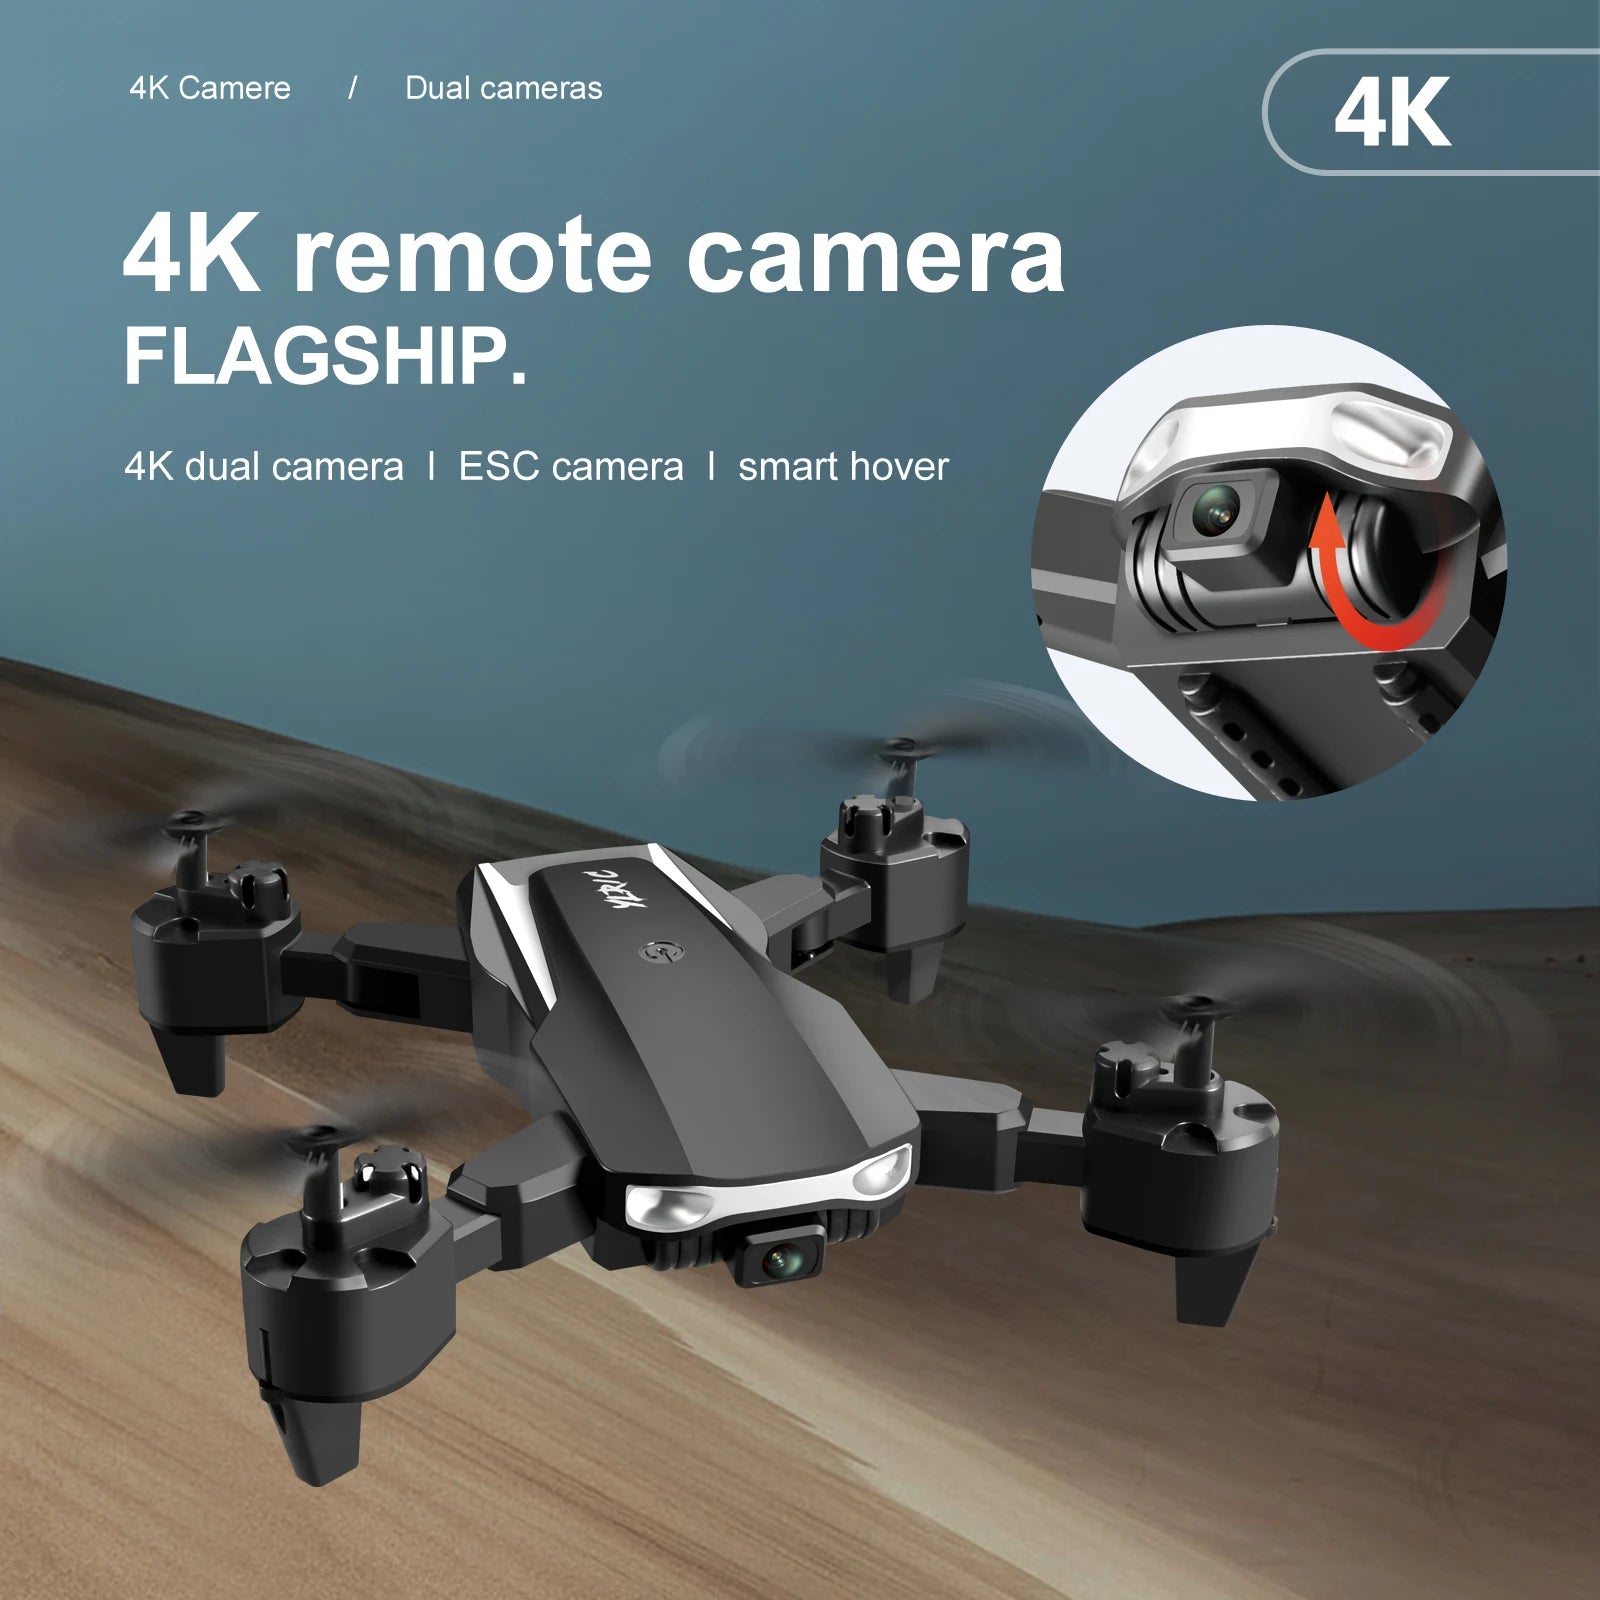 S90 Mini Drone, 4k camere dual cameras 4k 4k remote camera flagship .